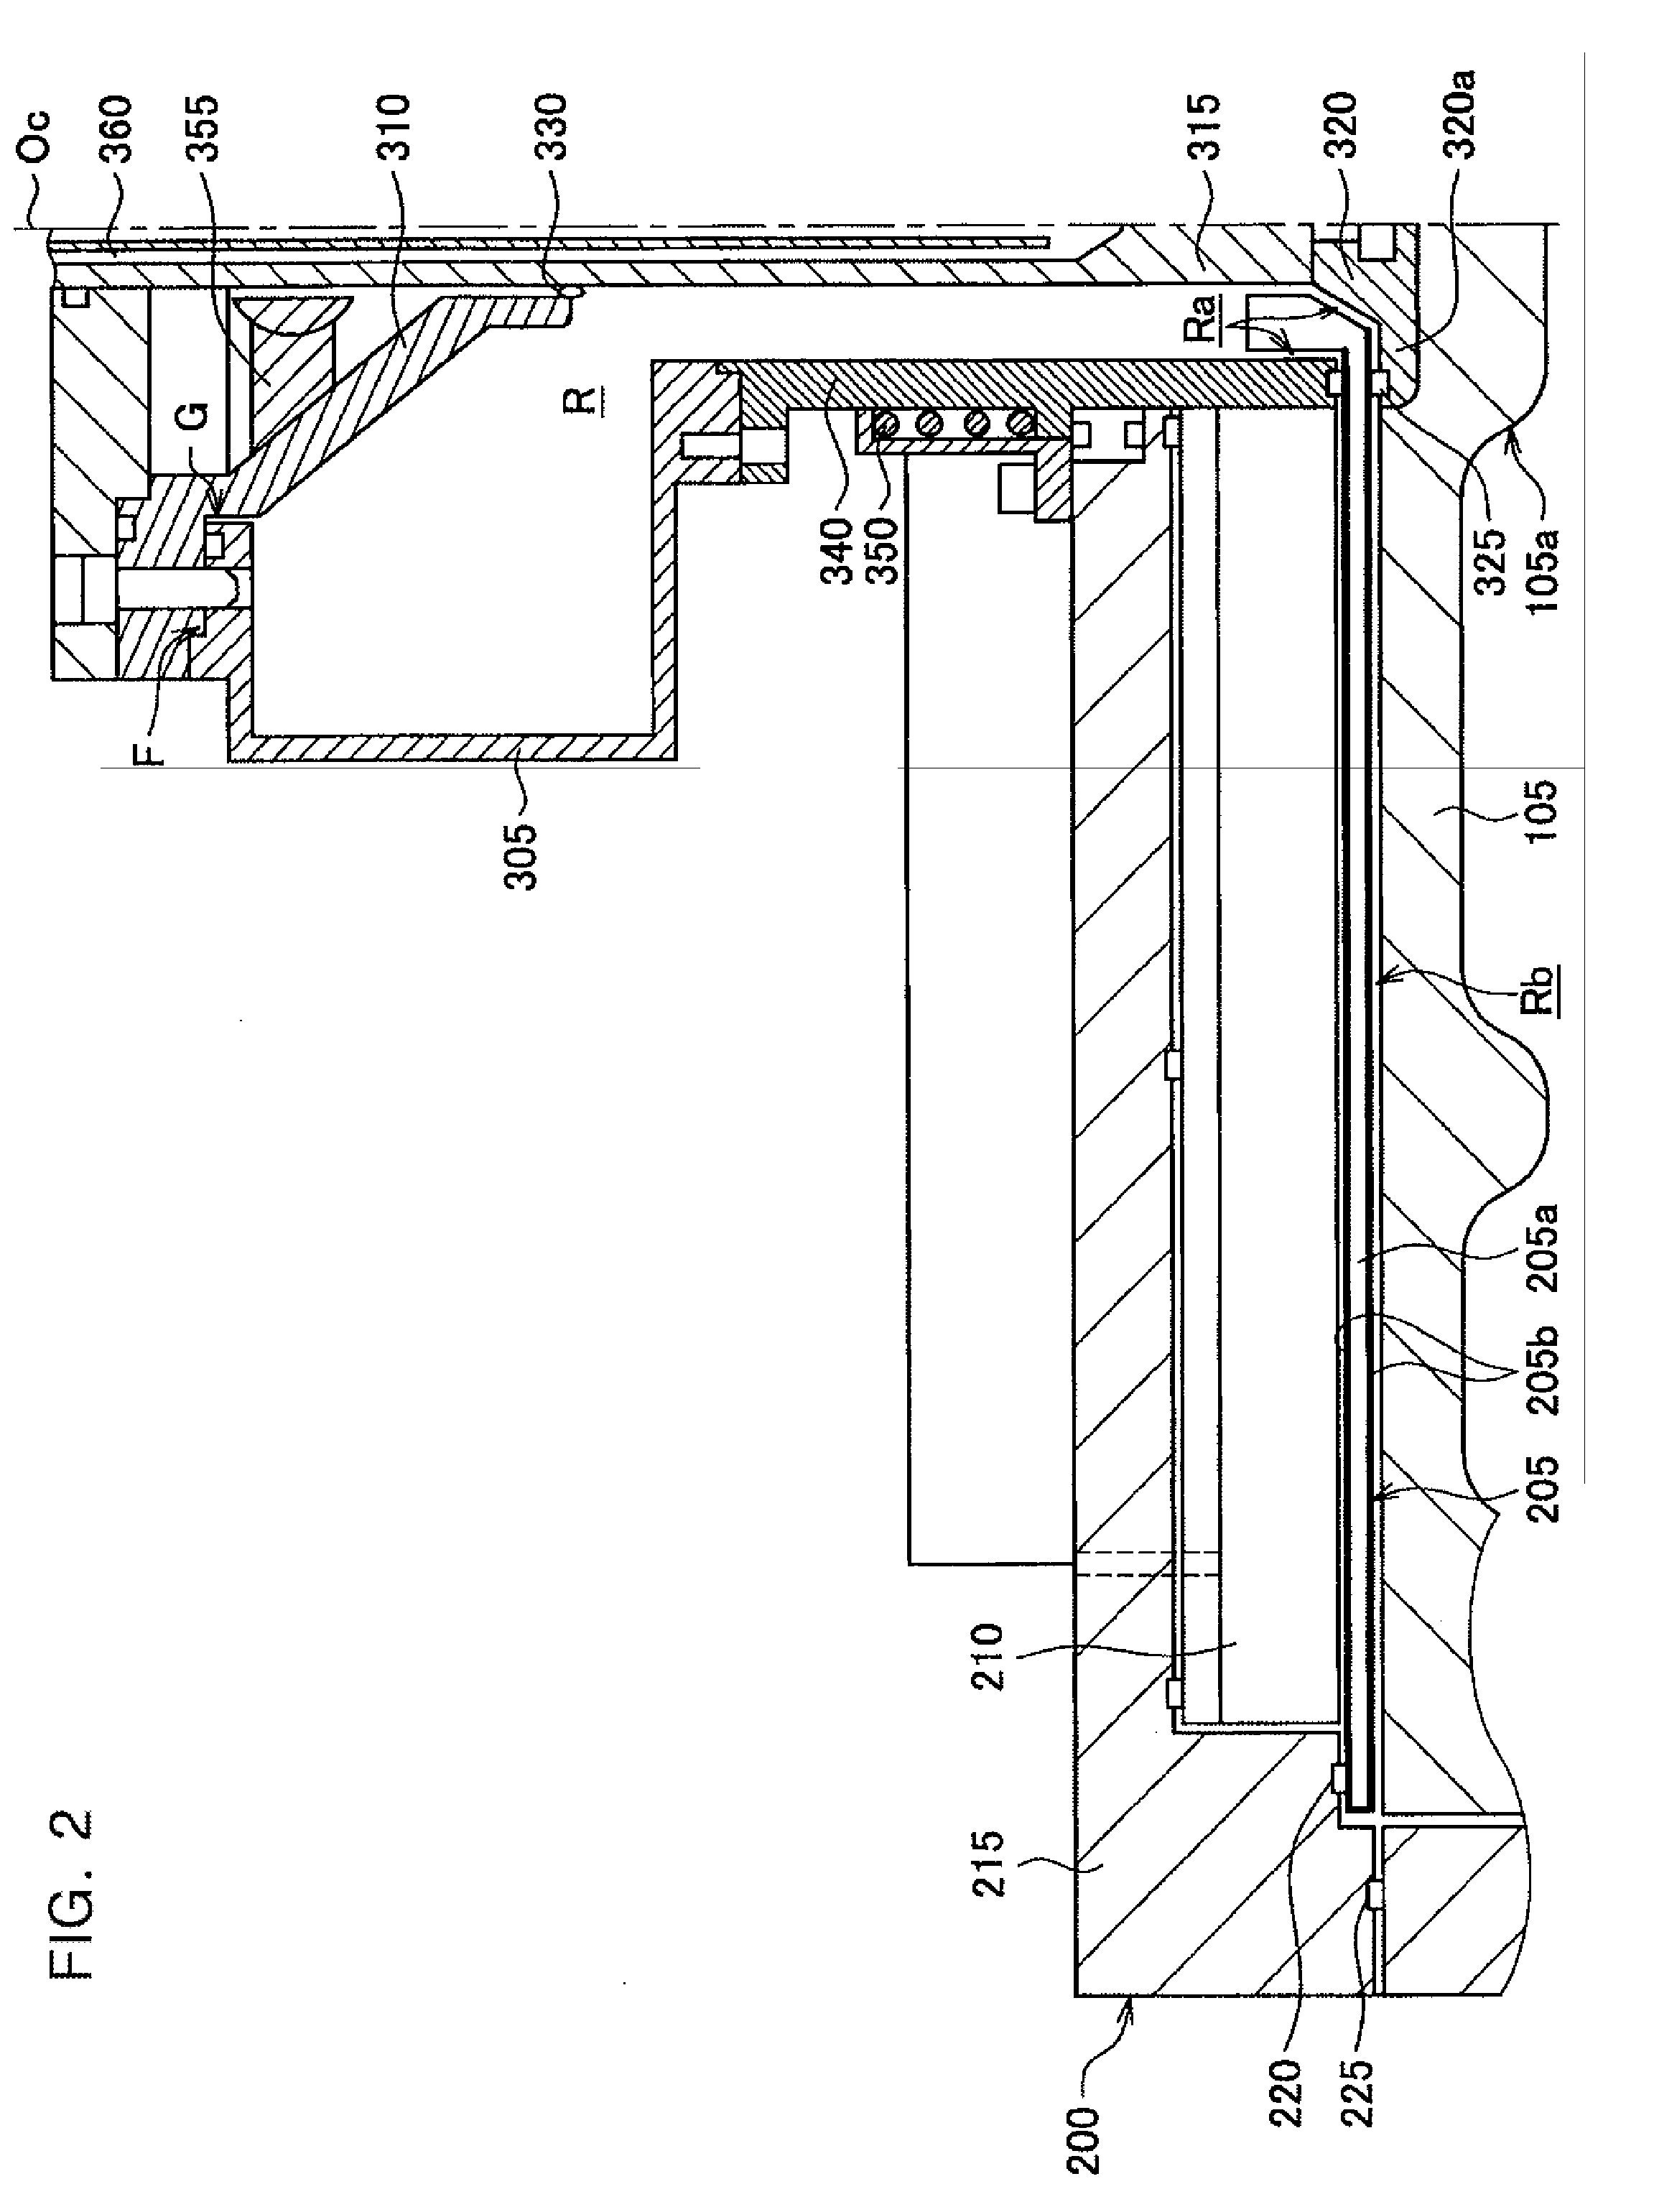 Microwave plasma processing apparatus and method of supplying microwaves using the apparatus